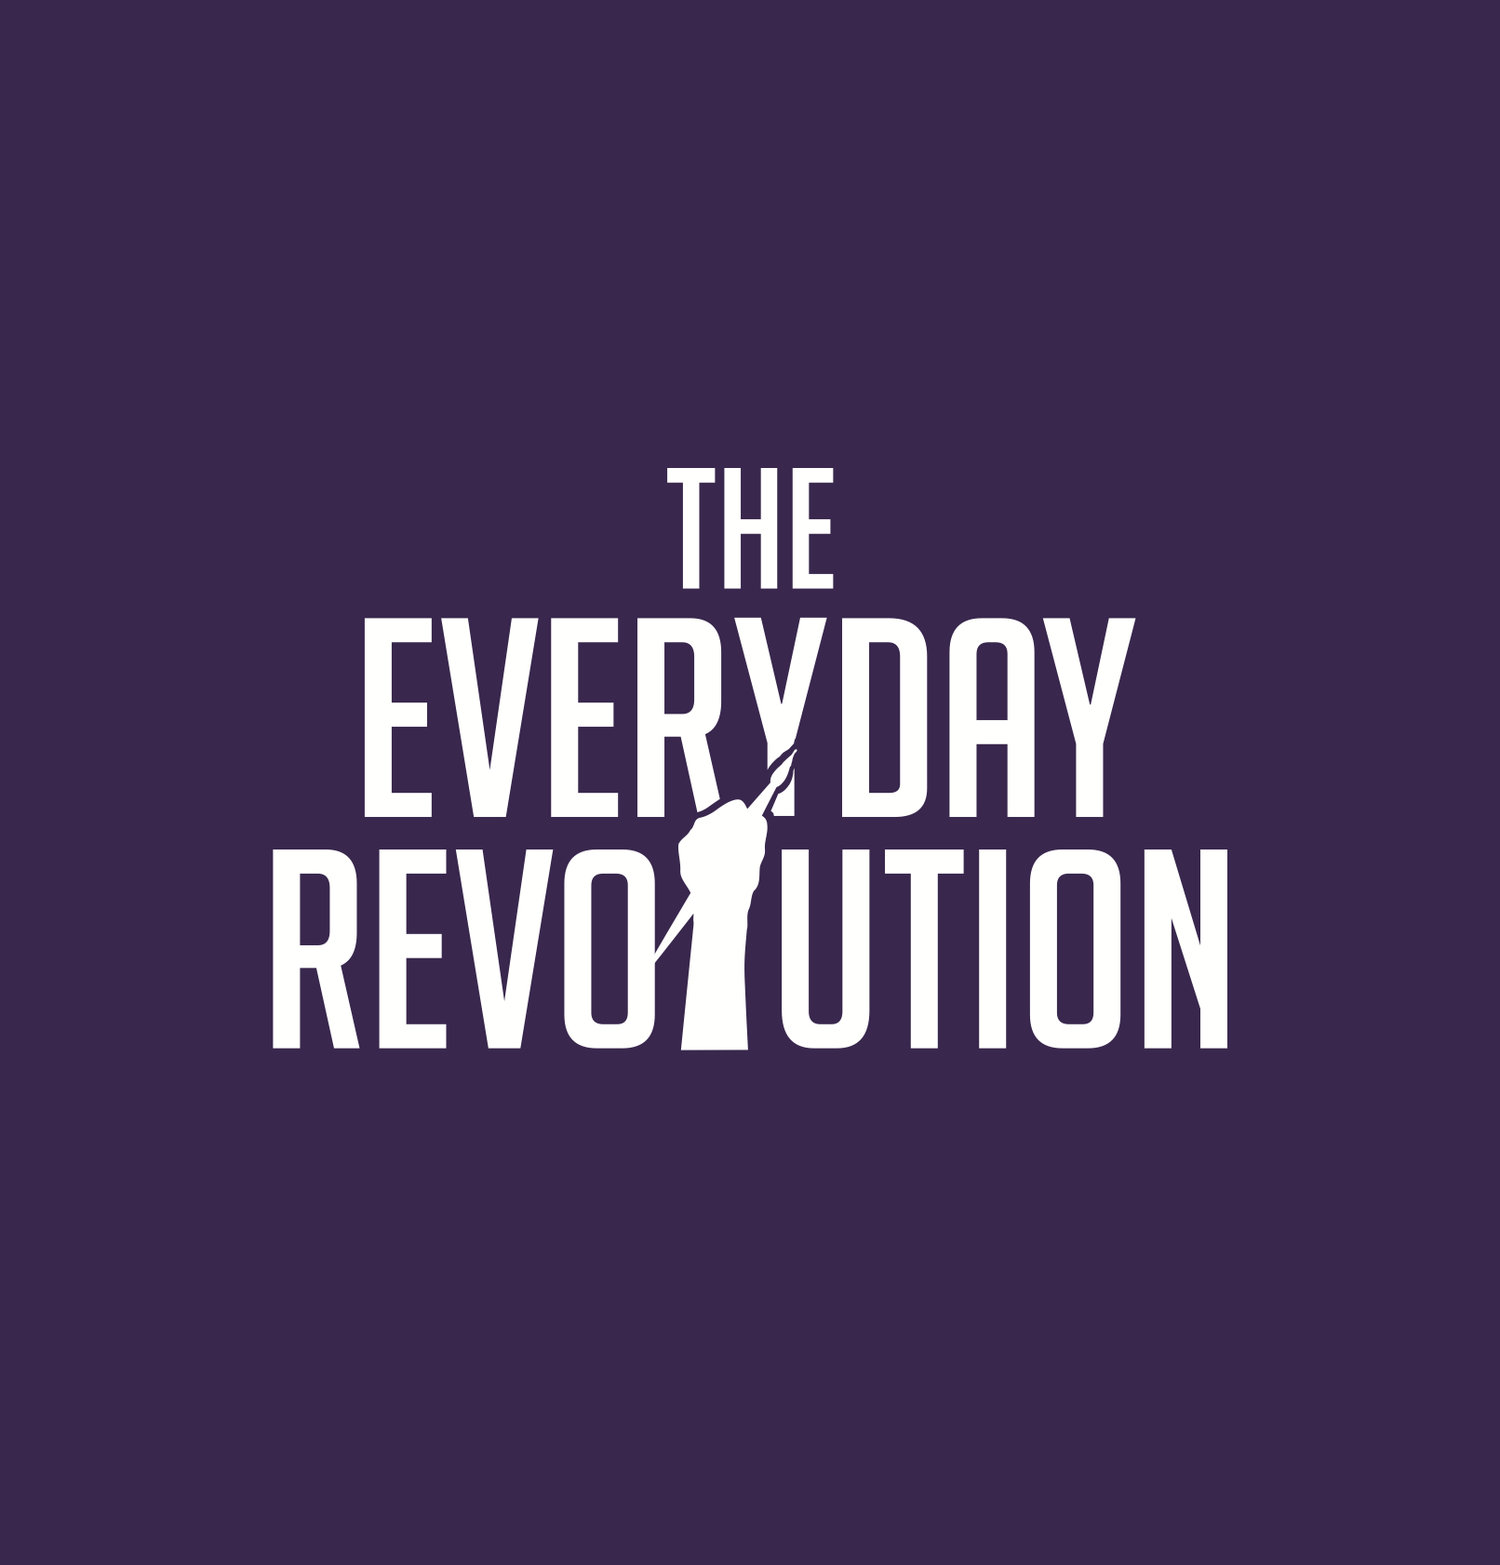 The Everyday Revolution